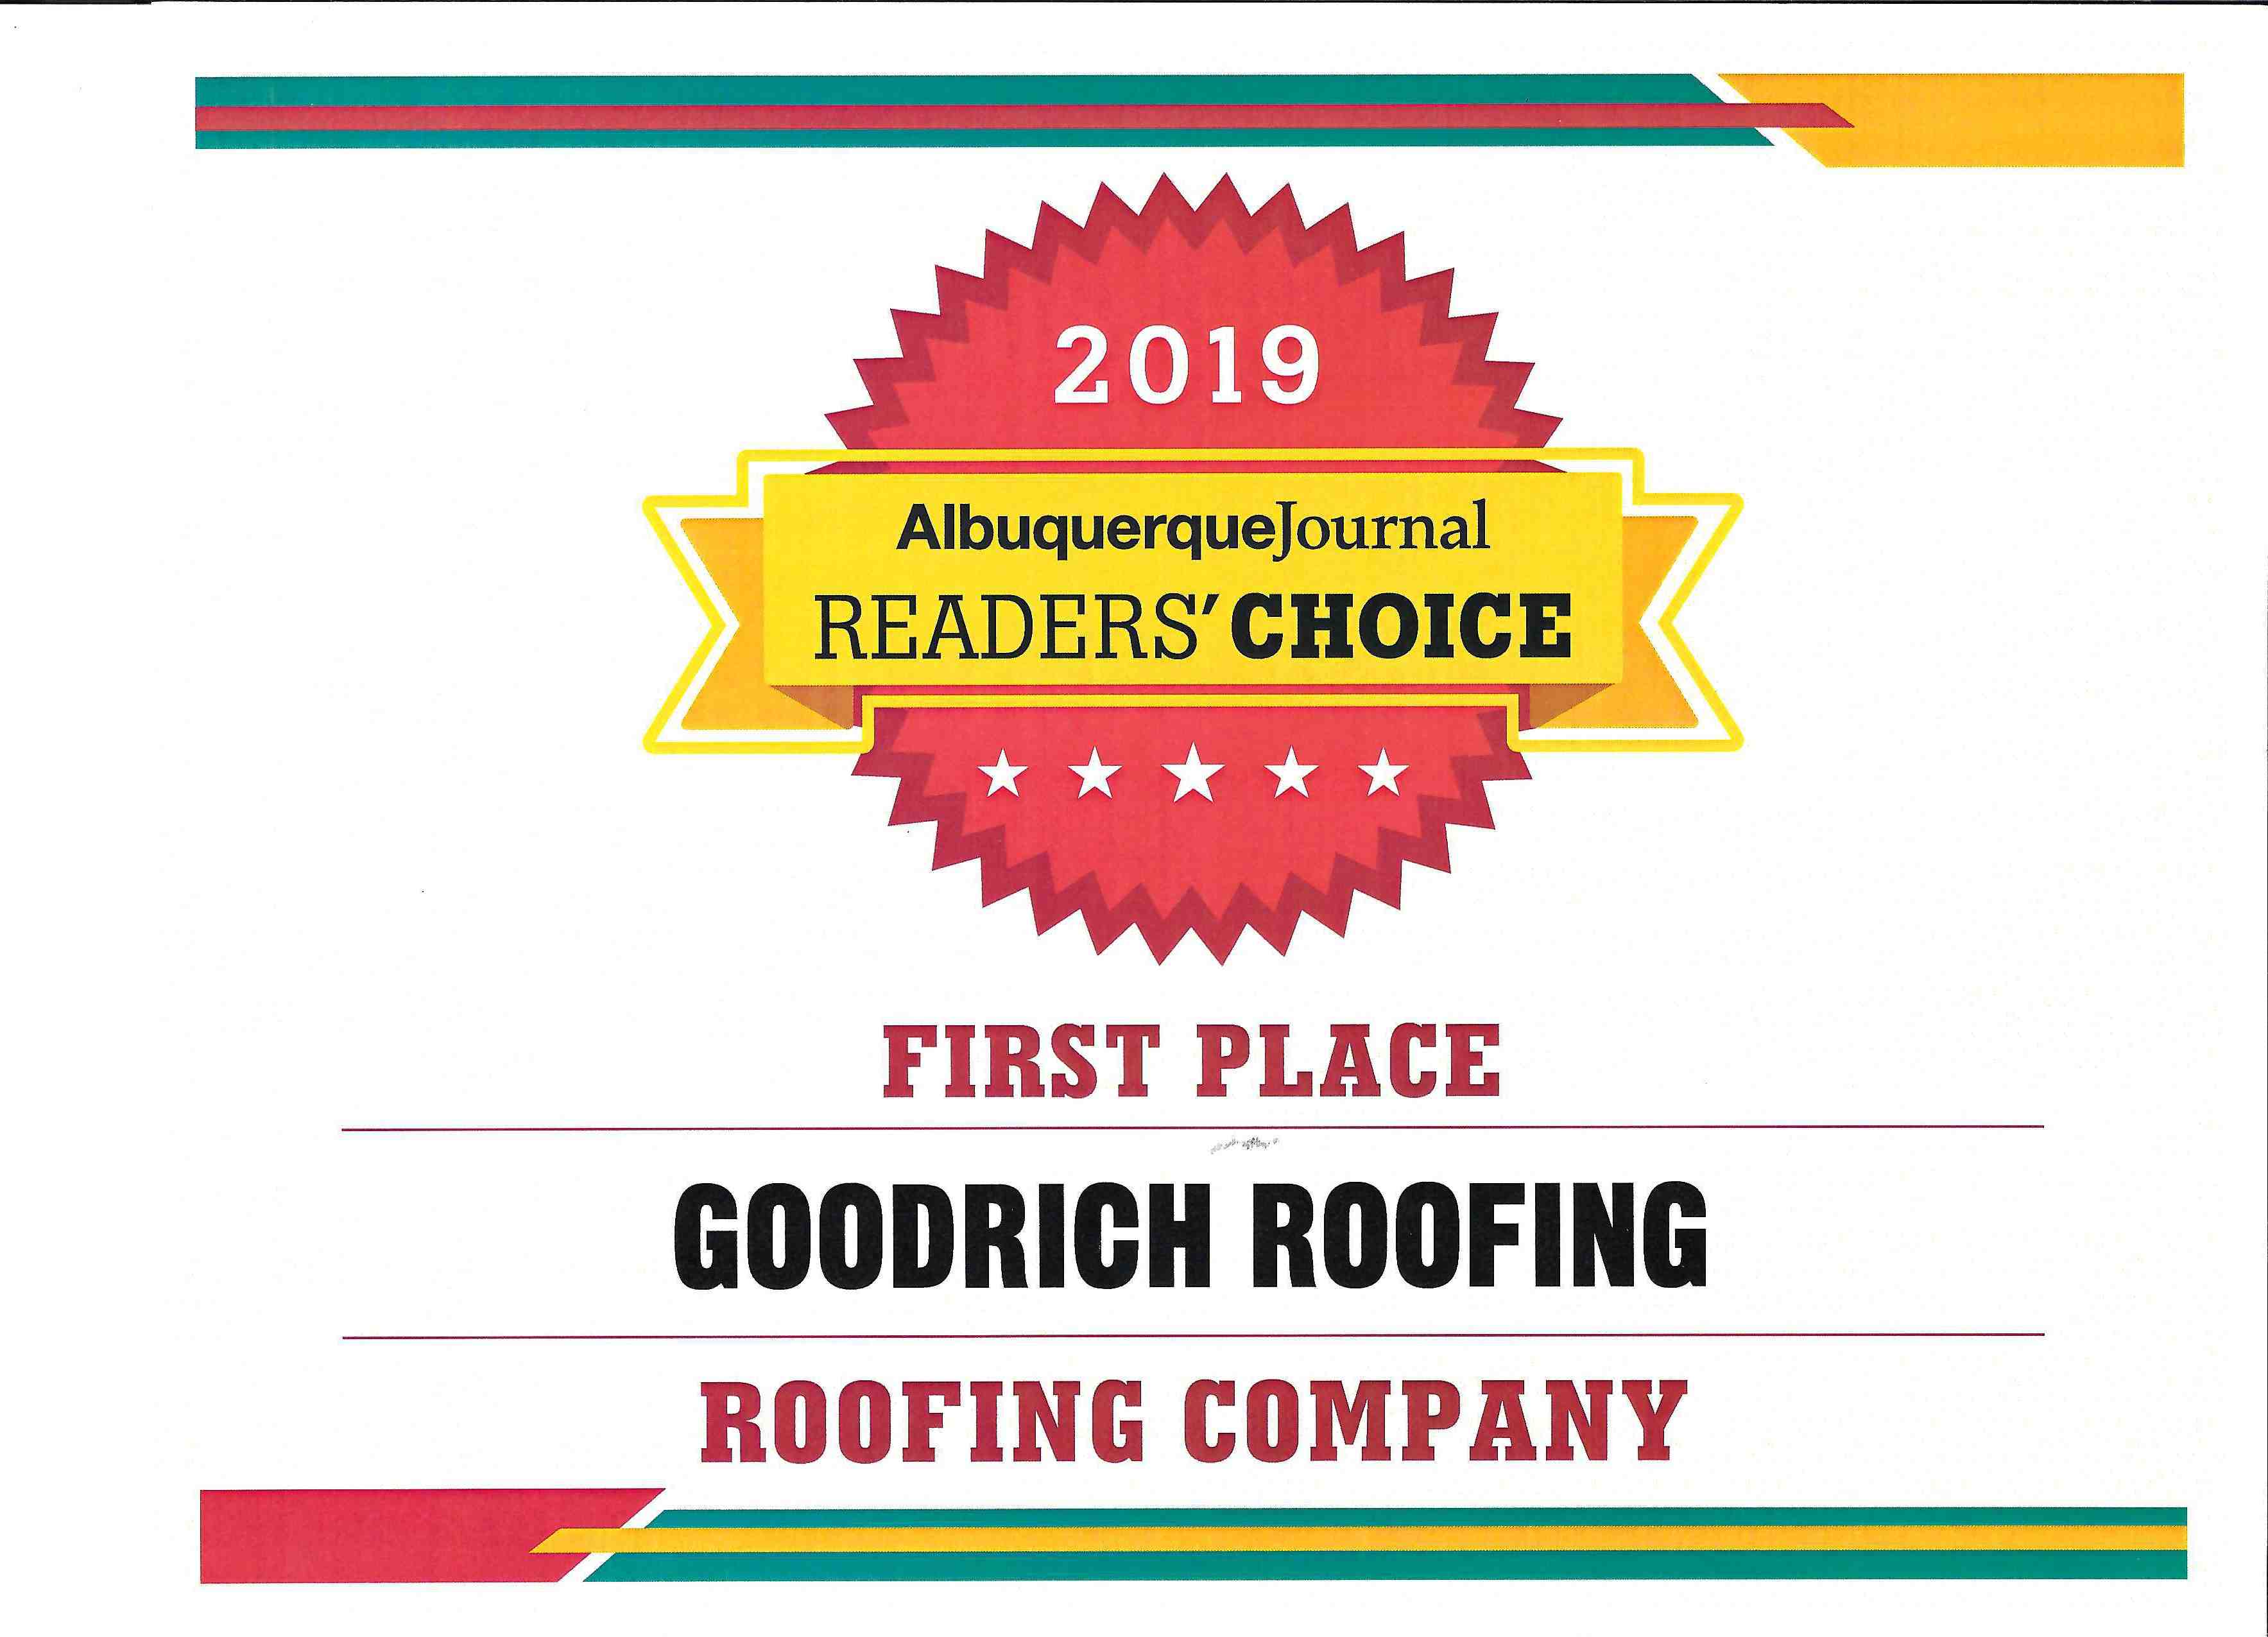 support_1589486990_Goodrich-Roofing-ABQ-Journal-Readers-Corice-Award-2019